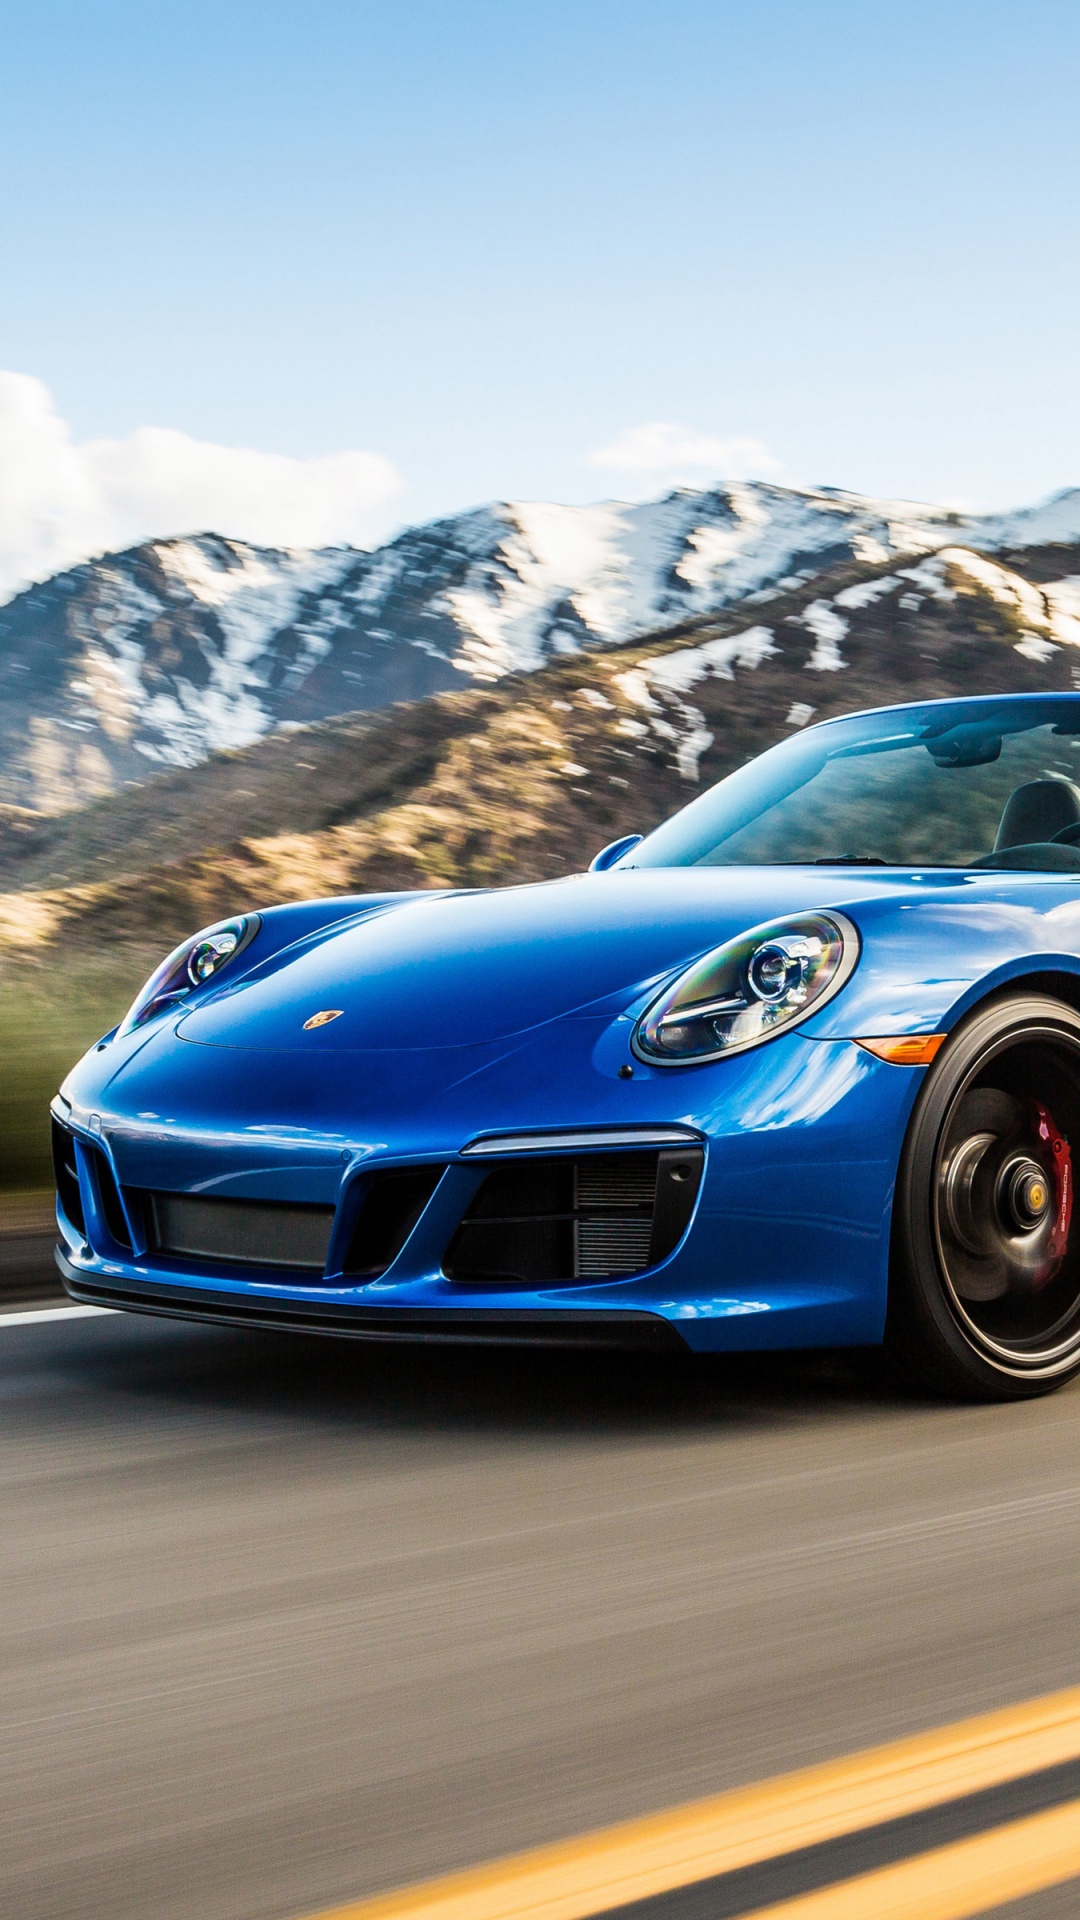 Blue Porsche 911 on Road During Daytime. Wallpaper in 1080x1920 Resolution